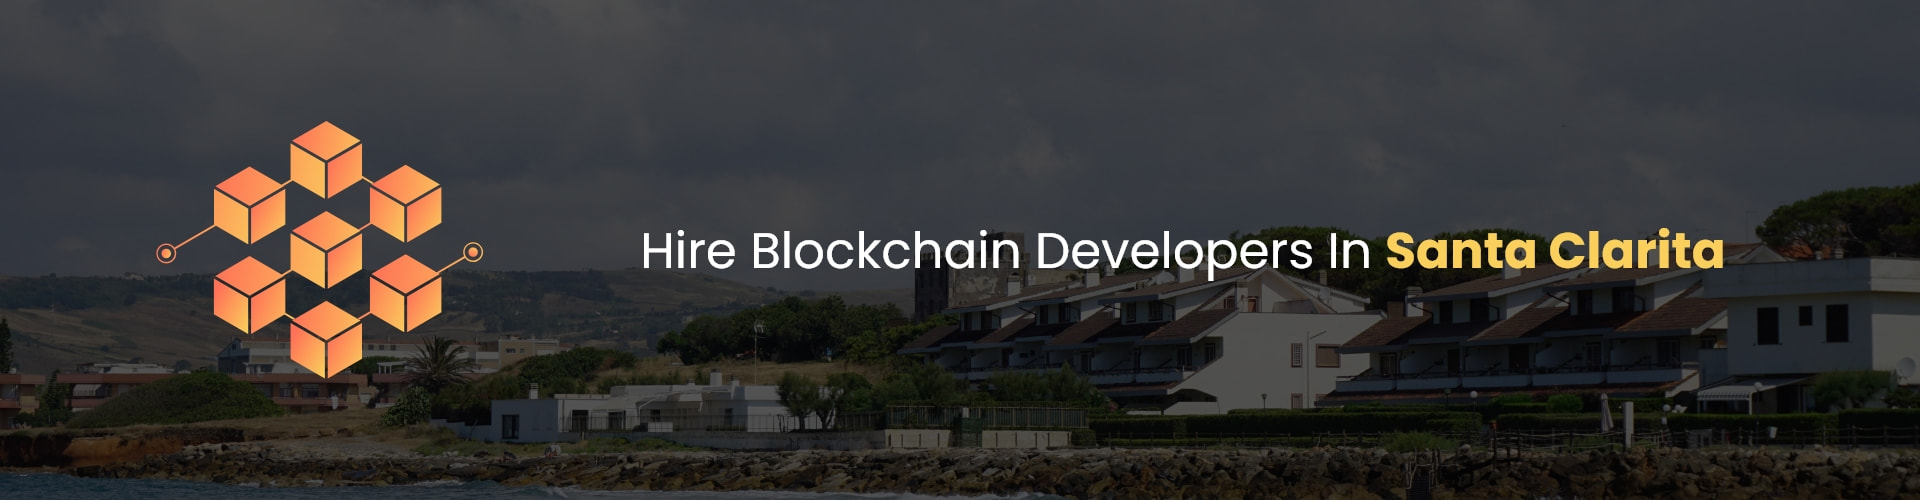 hire blockchain developers in santa clarita